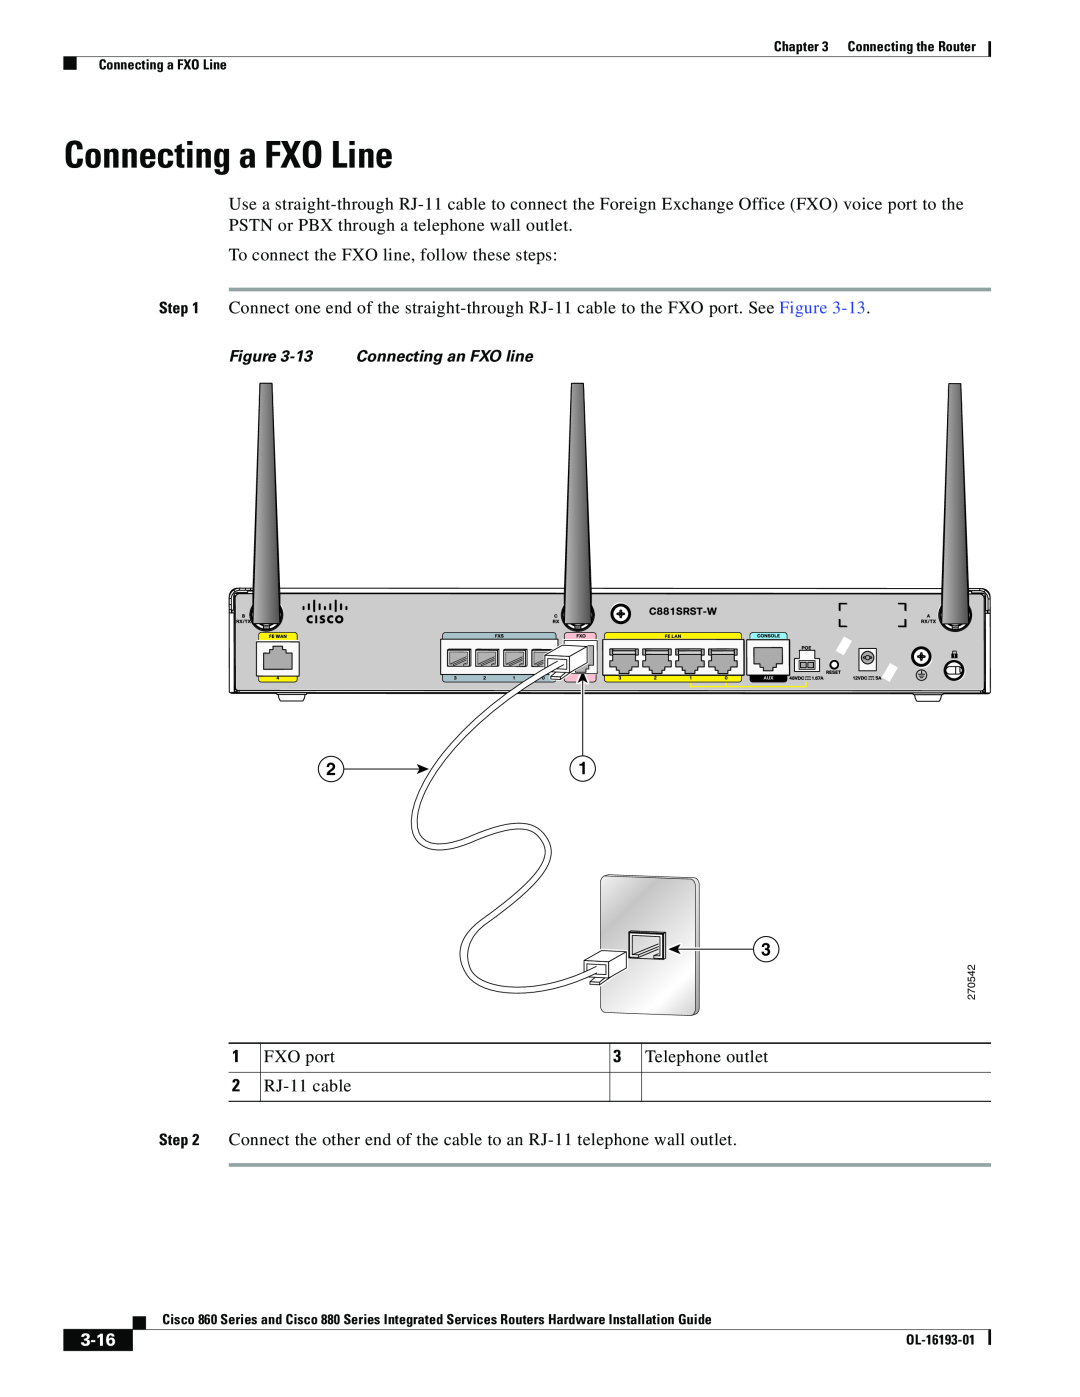 Cisco Systems C892FSPK9, HIG880, 861WGNPK9RF, 860 manual Connecting a FXO Line, 3-16 